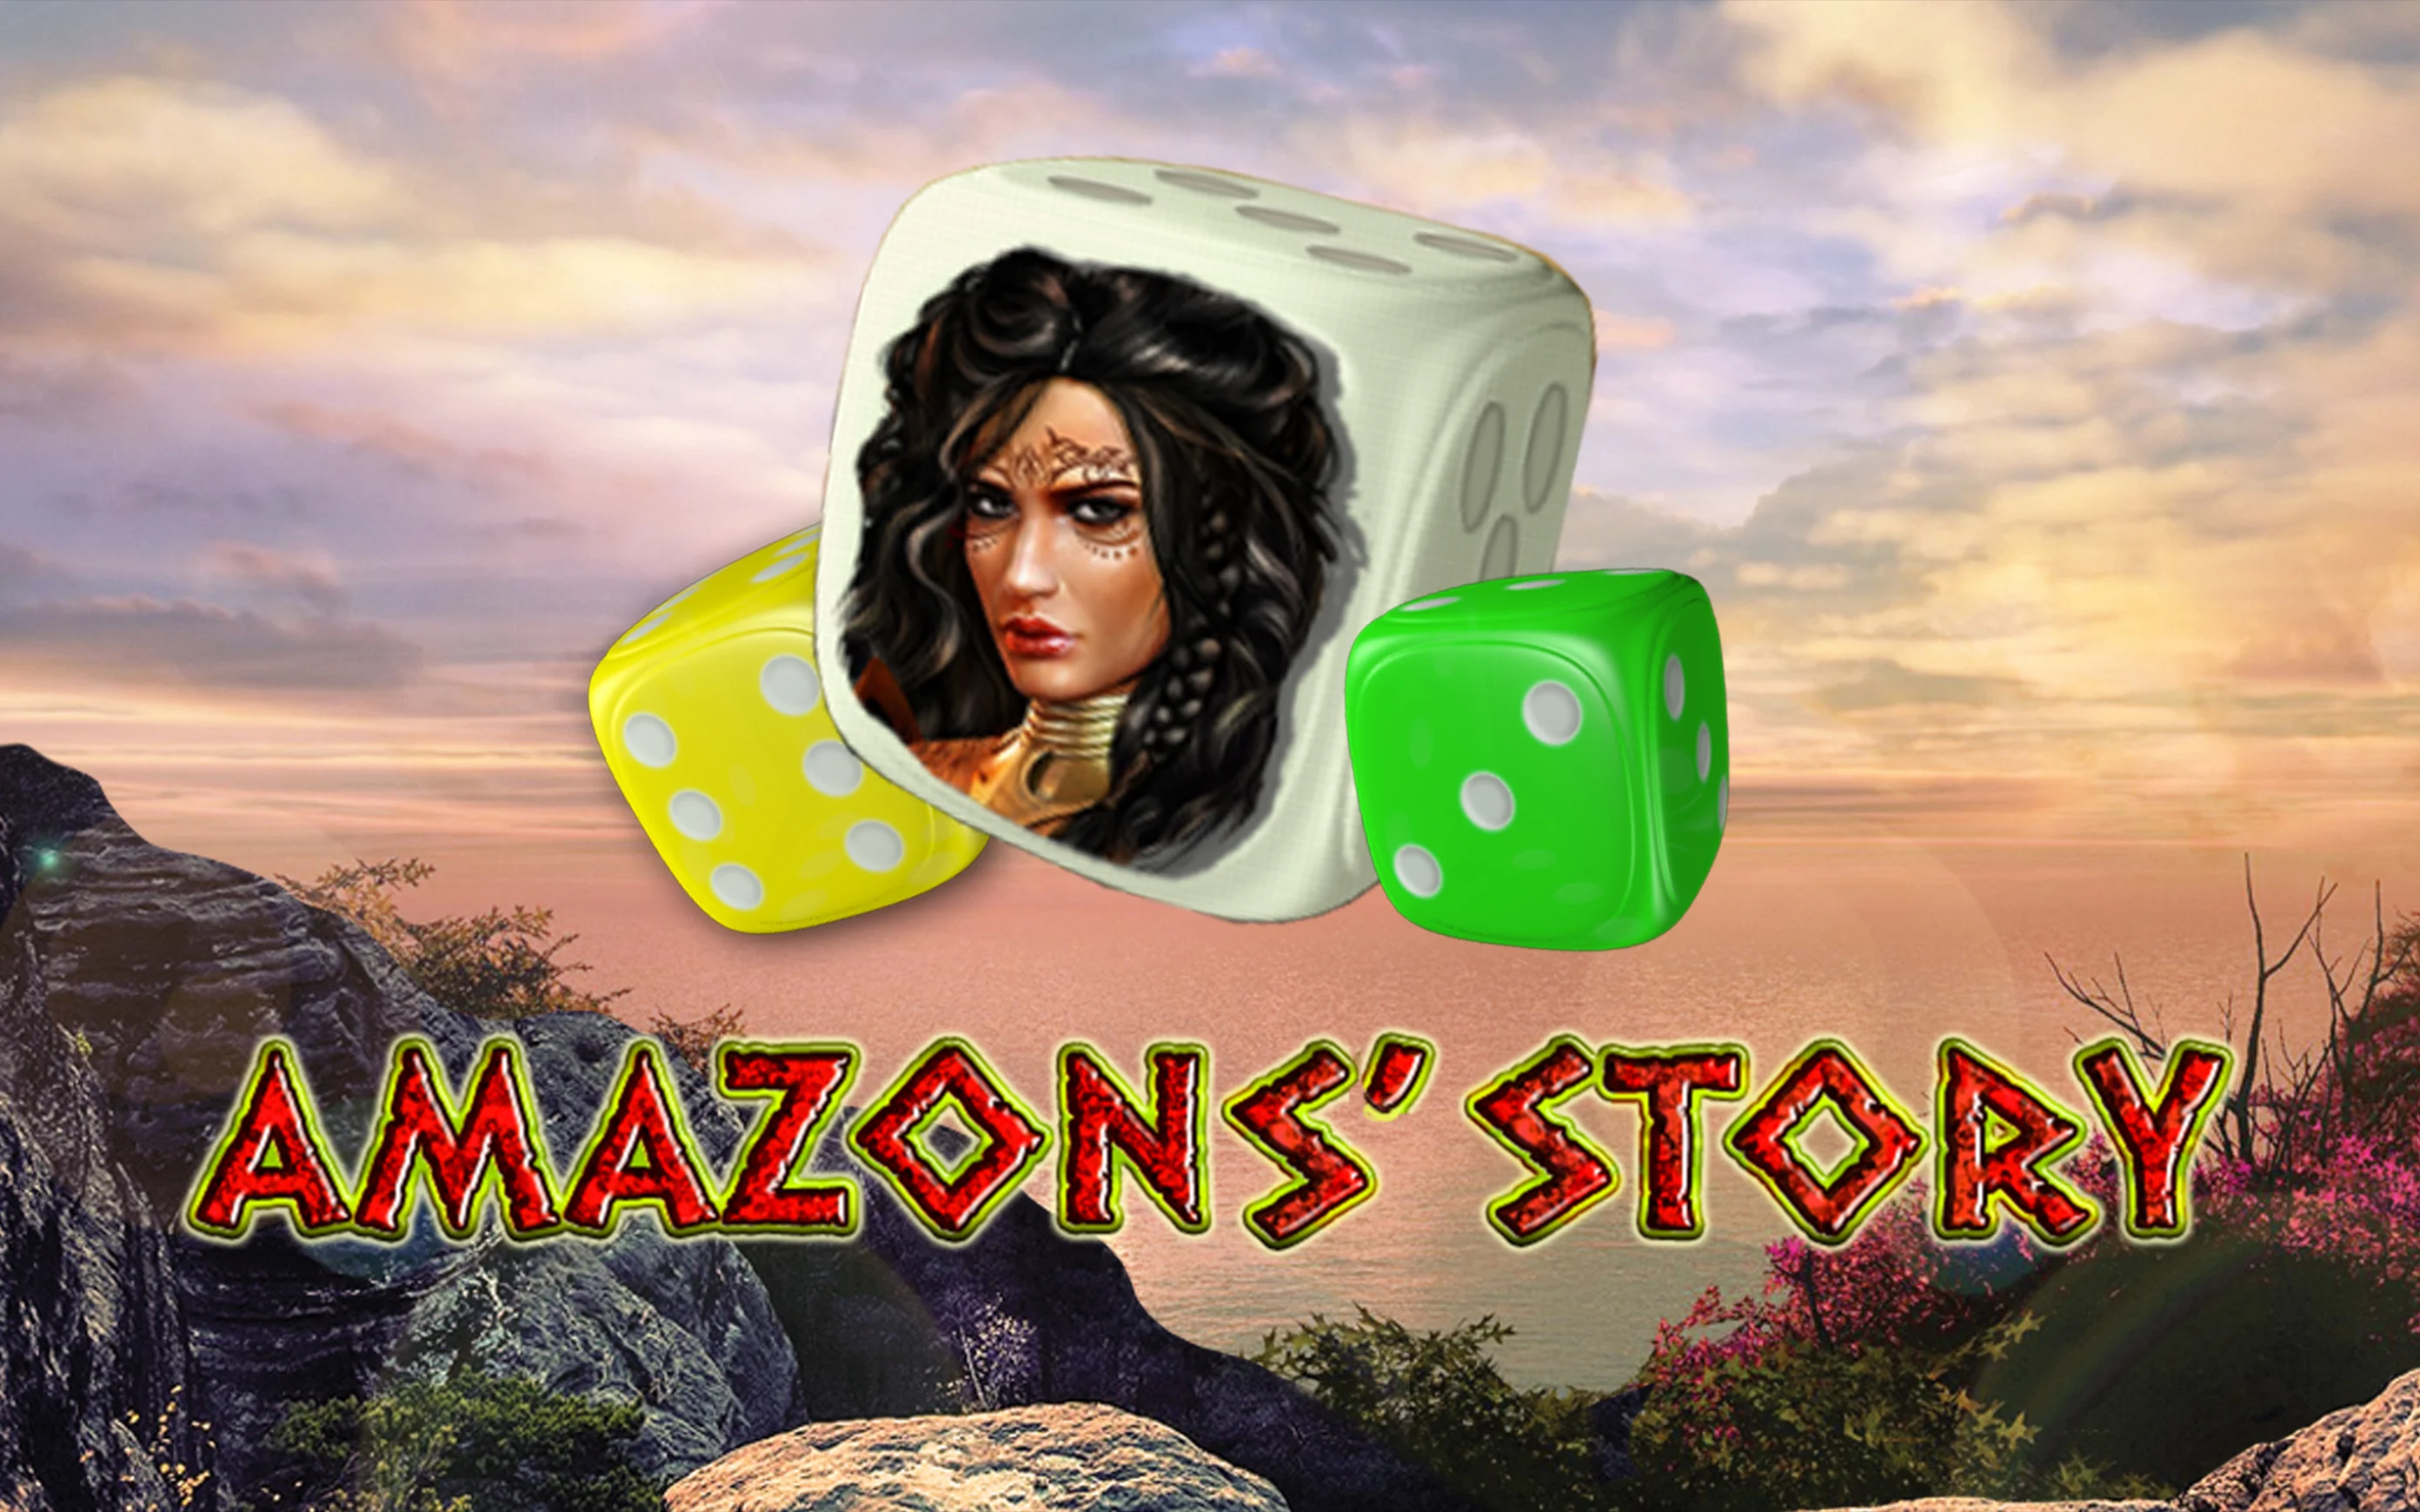 Starcasino.be online casino üzerinden Amazons' Story oynayın